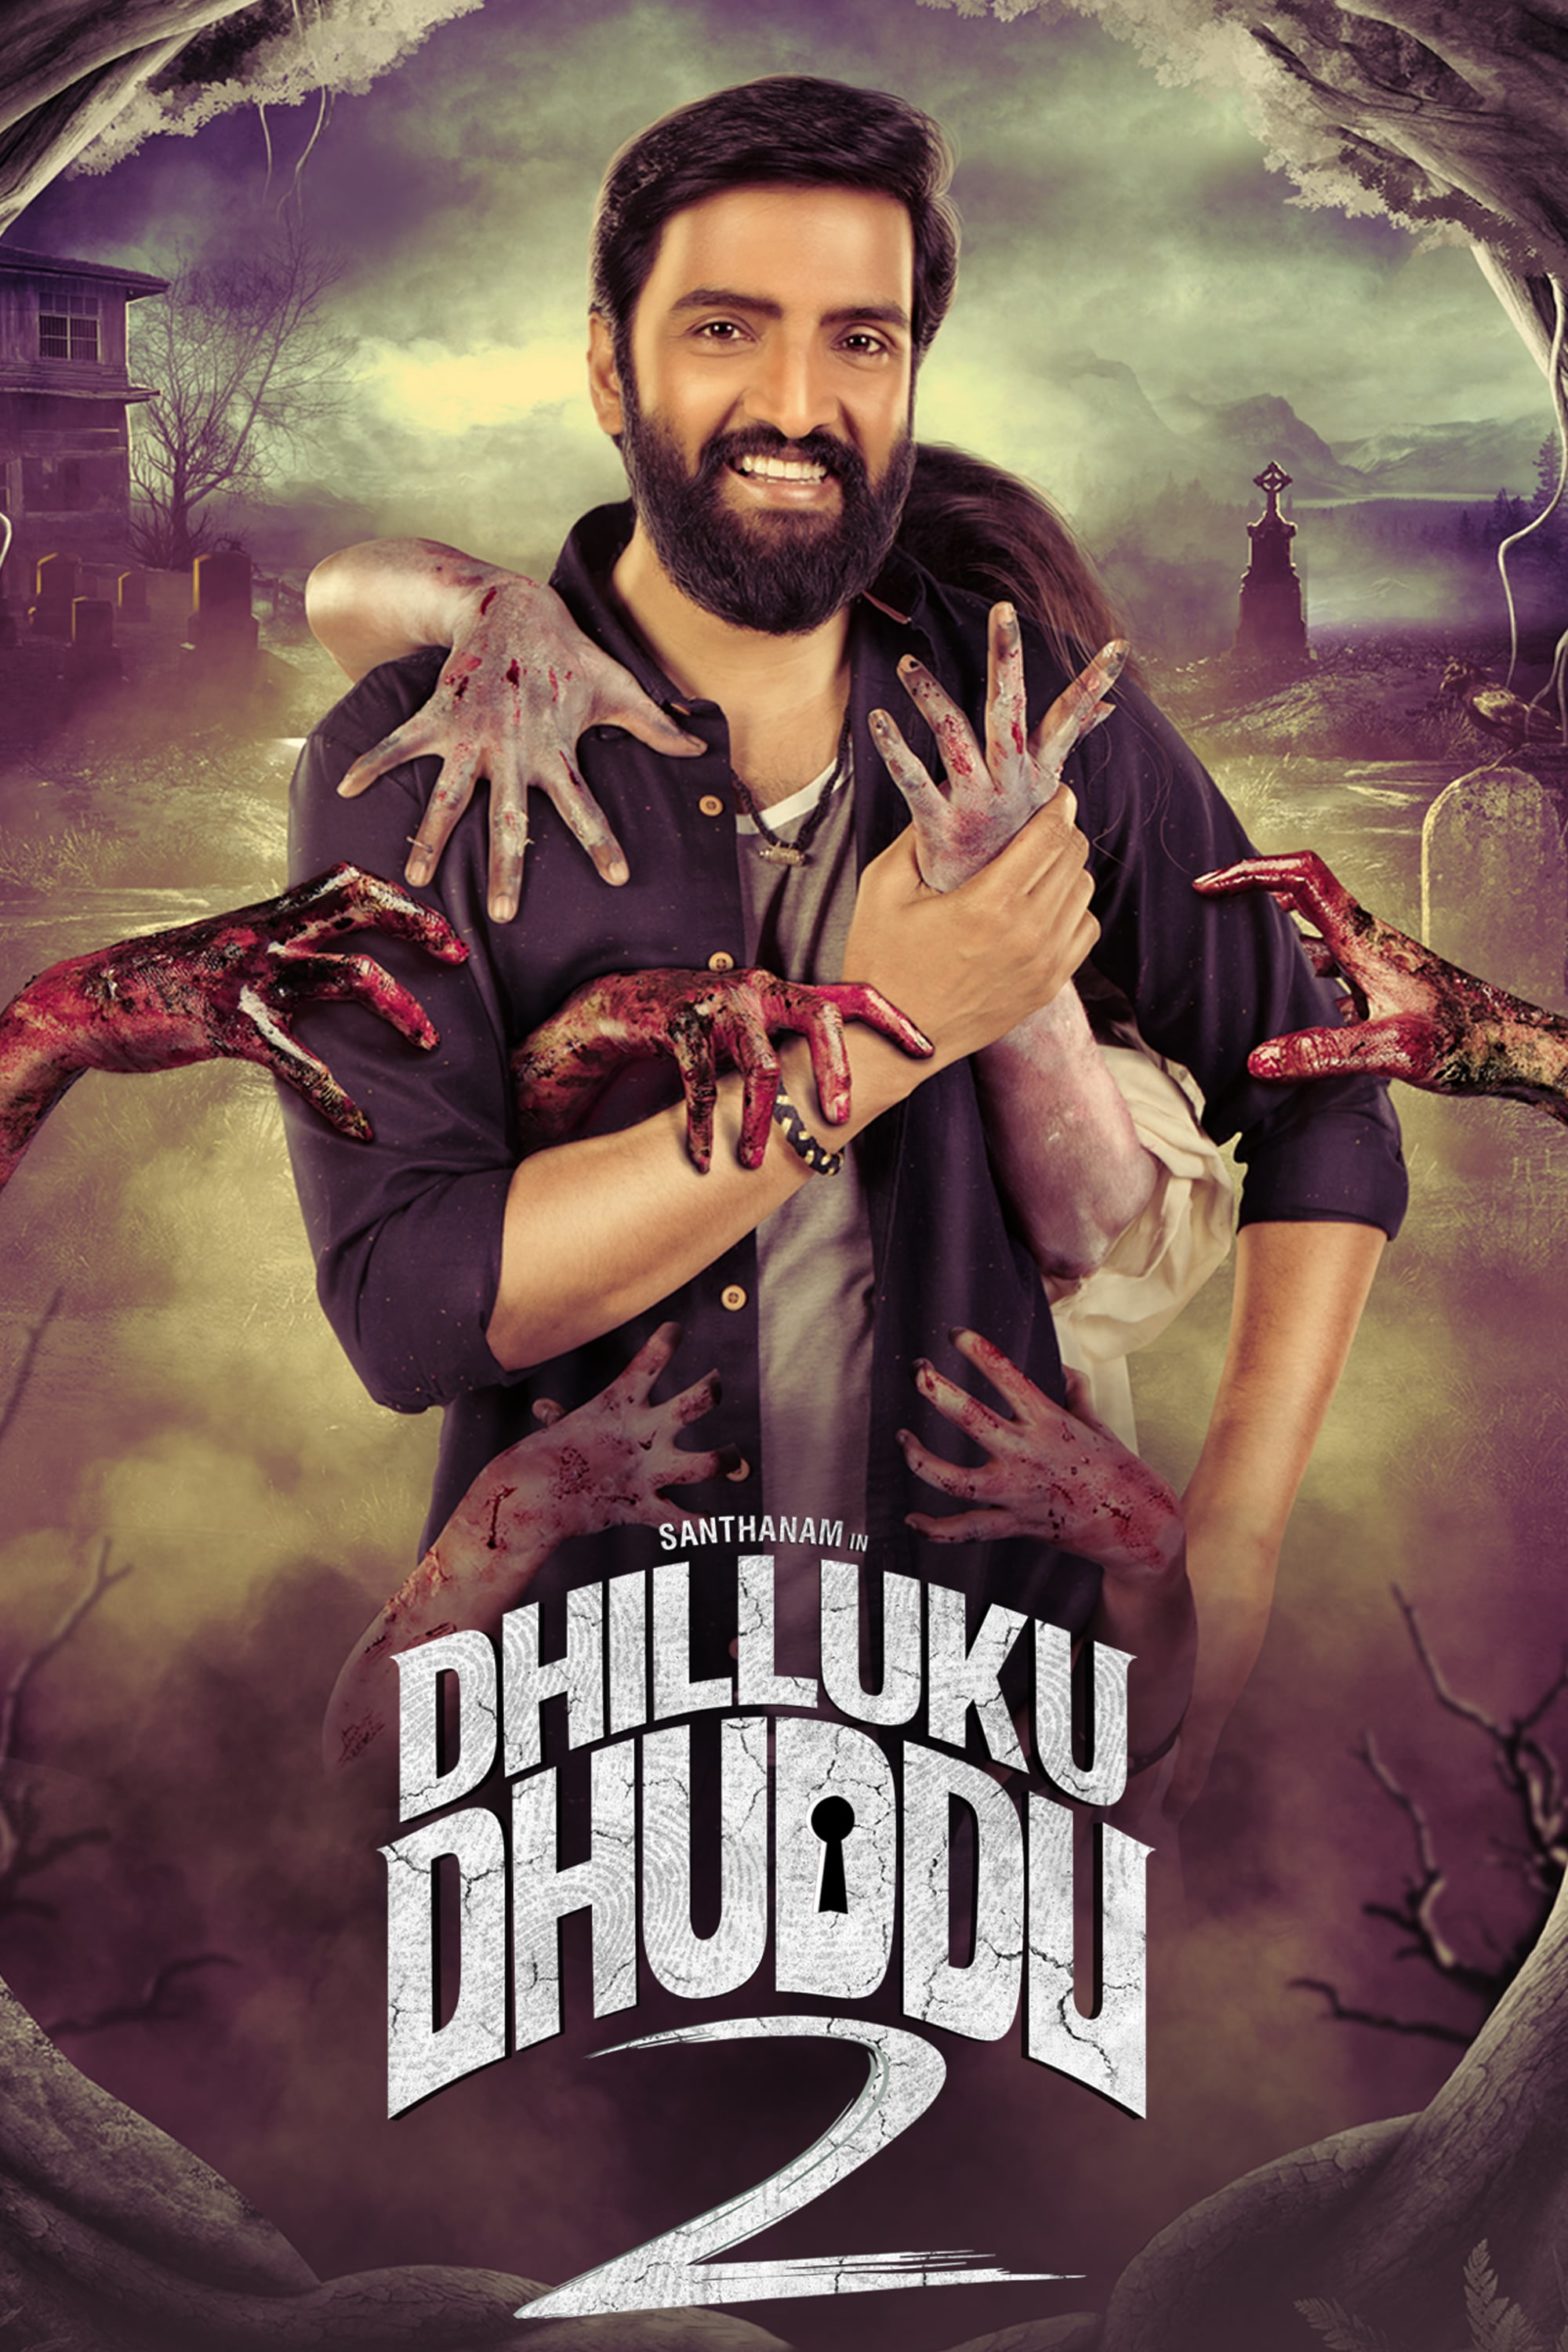 Poster for the movie "Dhilluku Dhuddu 2"